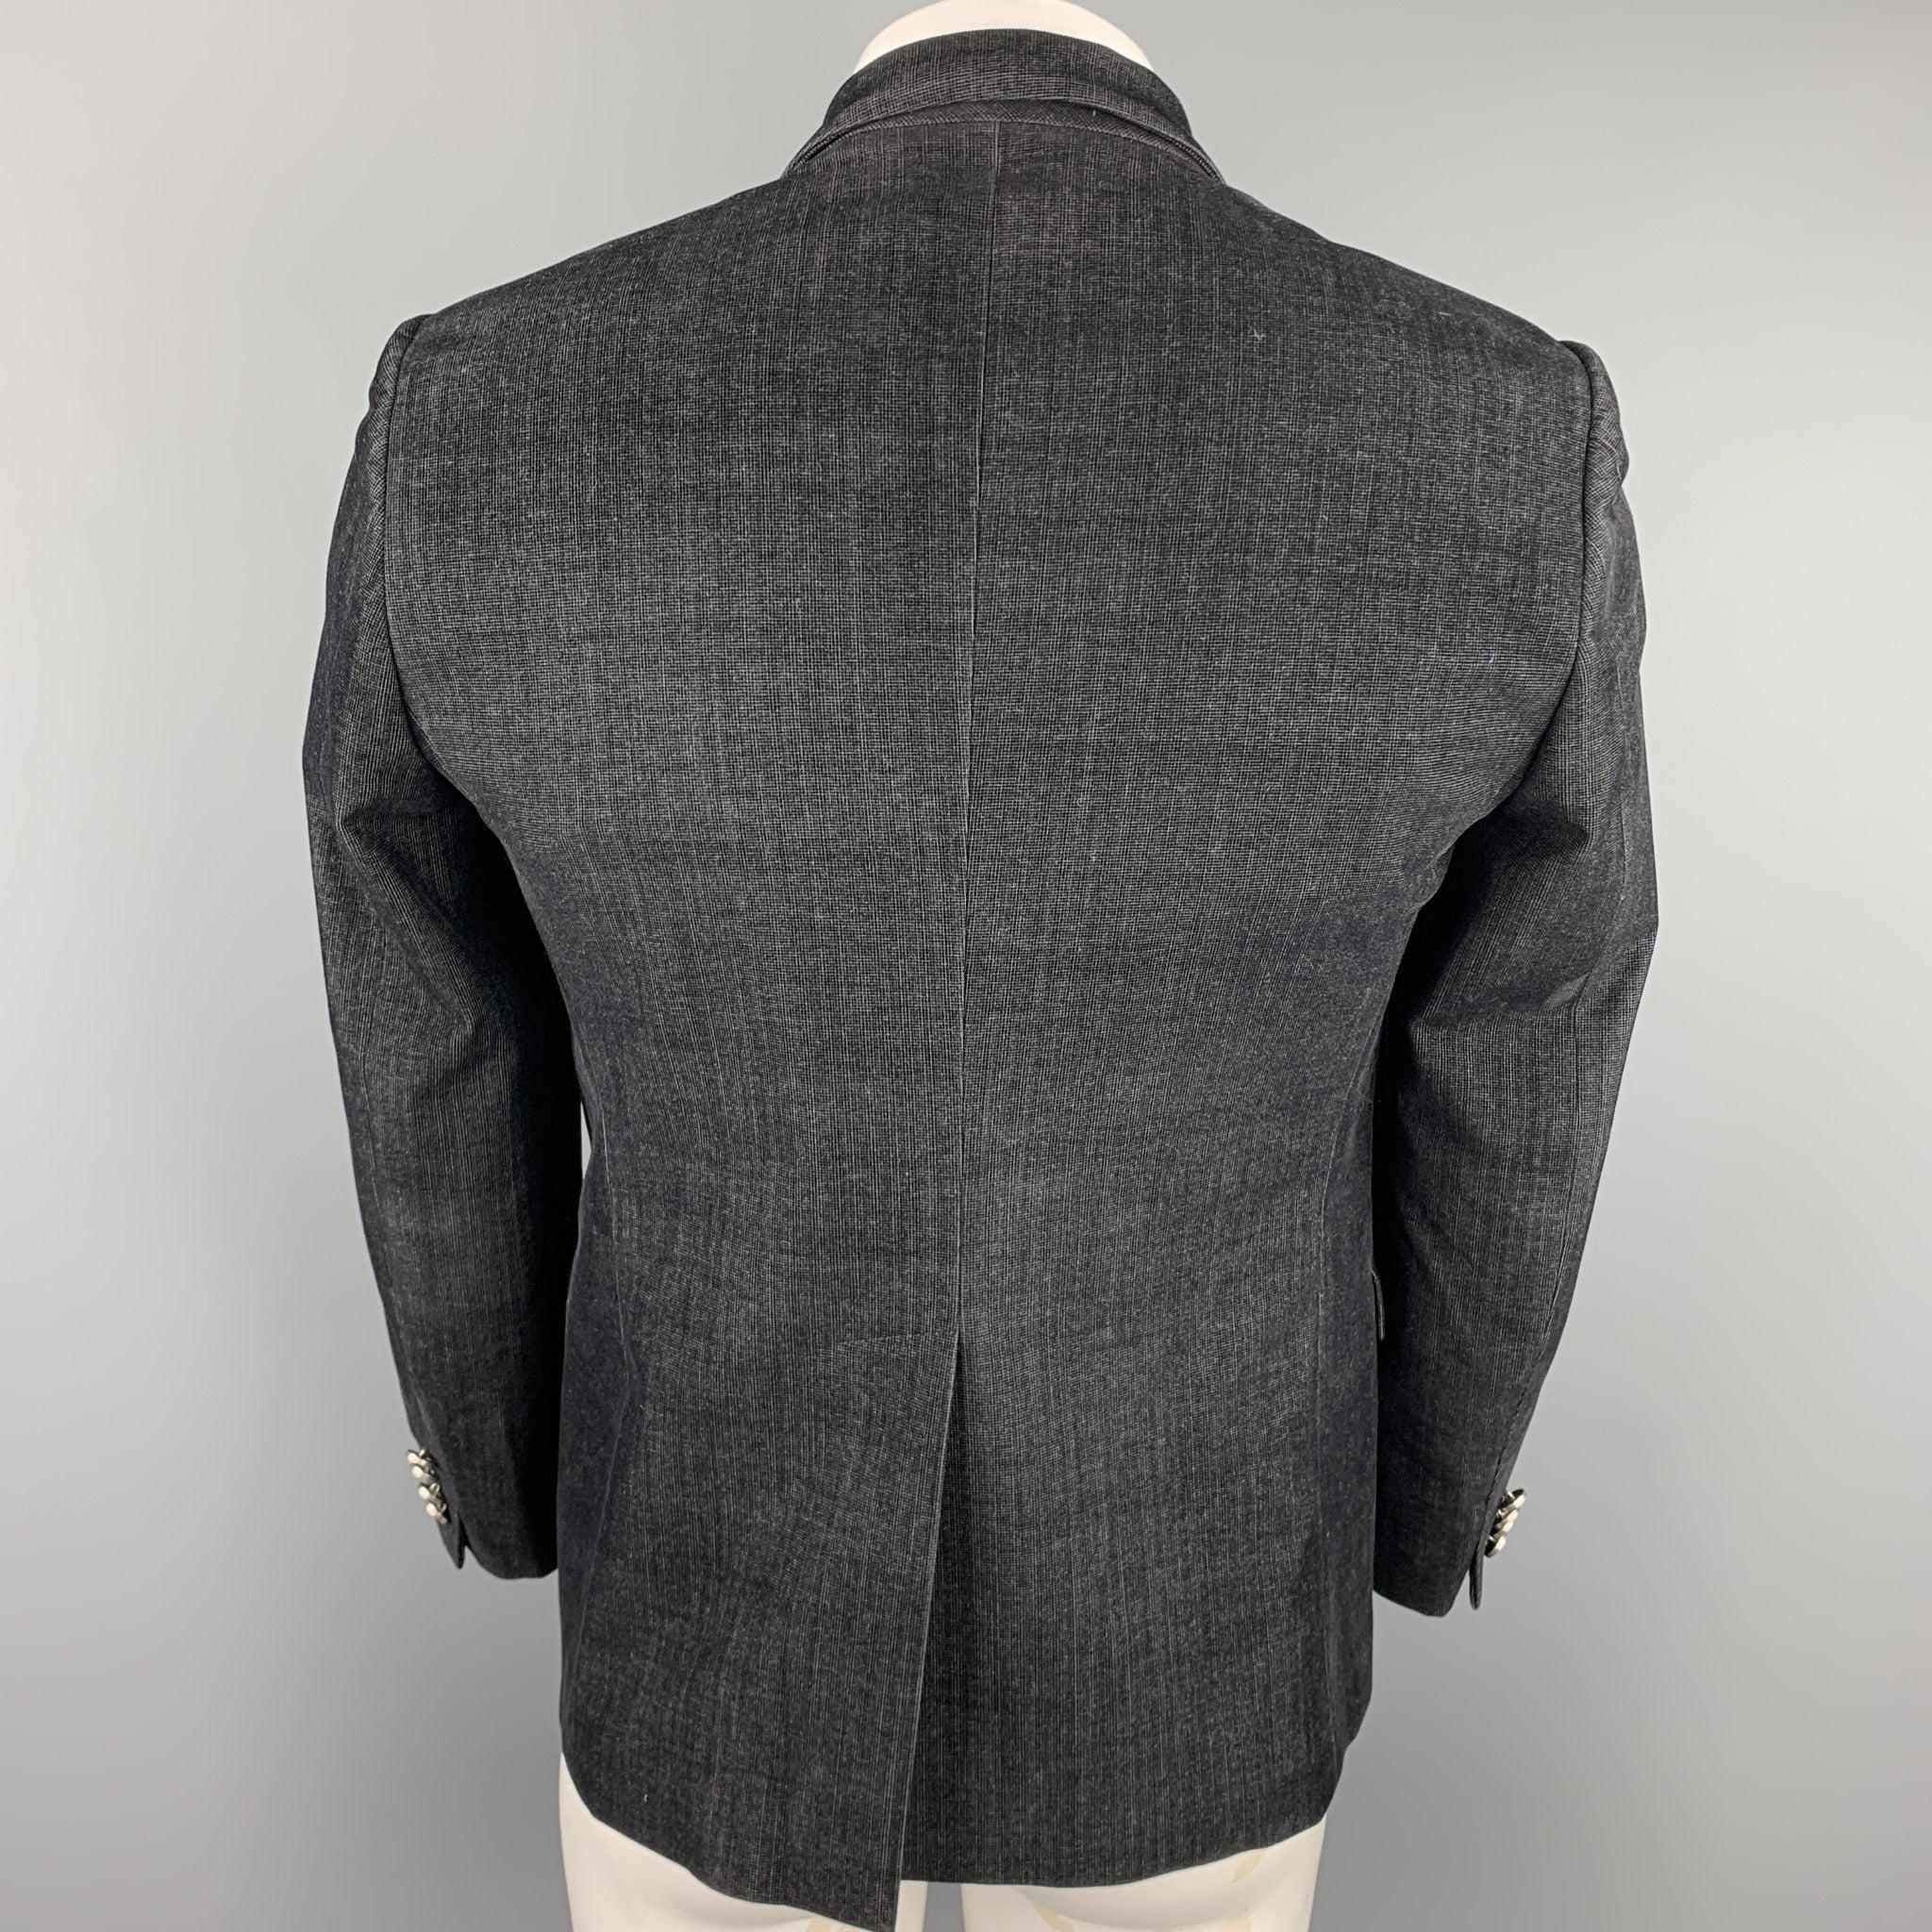 JUST CAVALLI Size 40 Black Textured Polyester Blend Peak Lapel Sport Coat For Sale 1